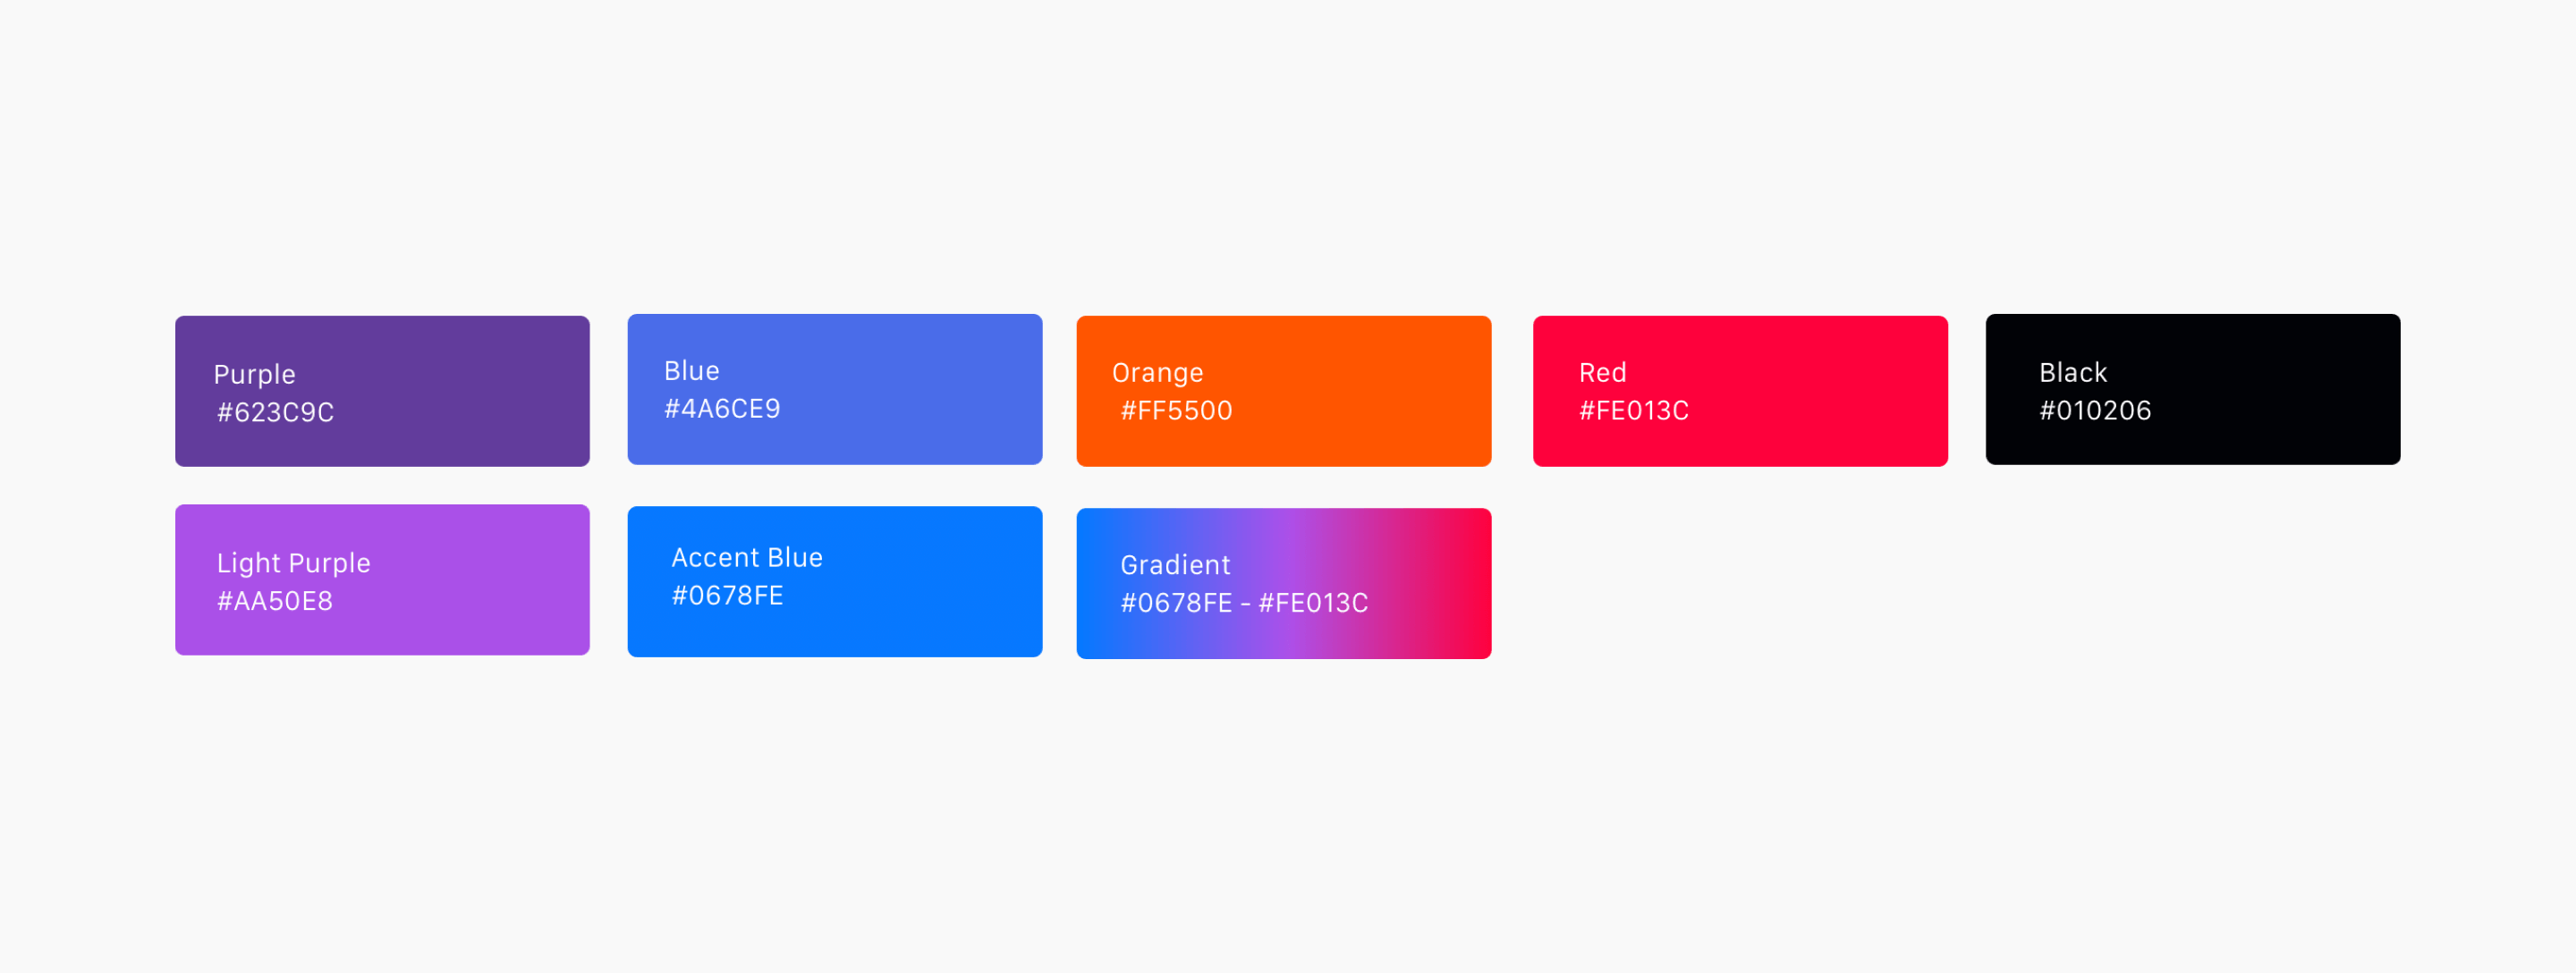 Redbull Top Punchlines UI Color Scheme